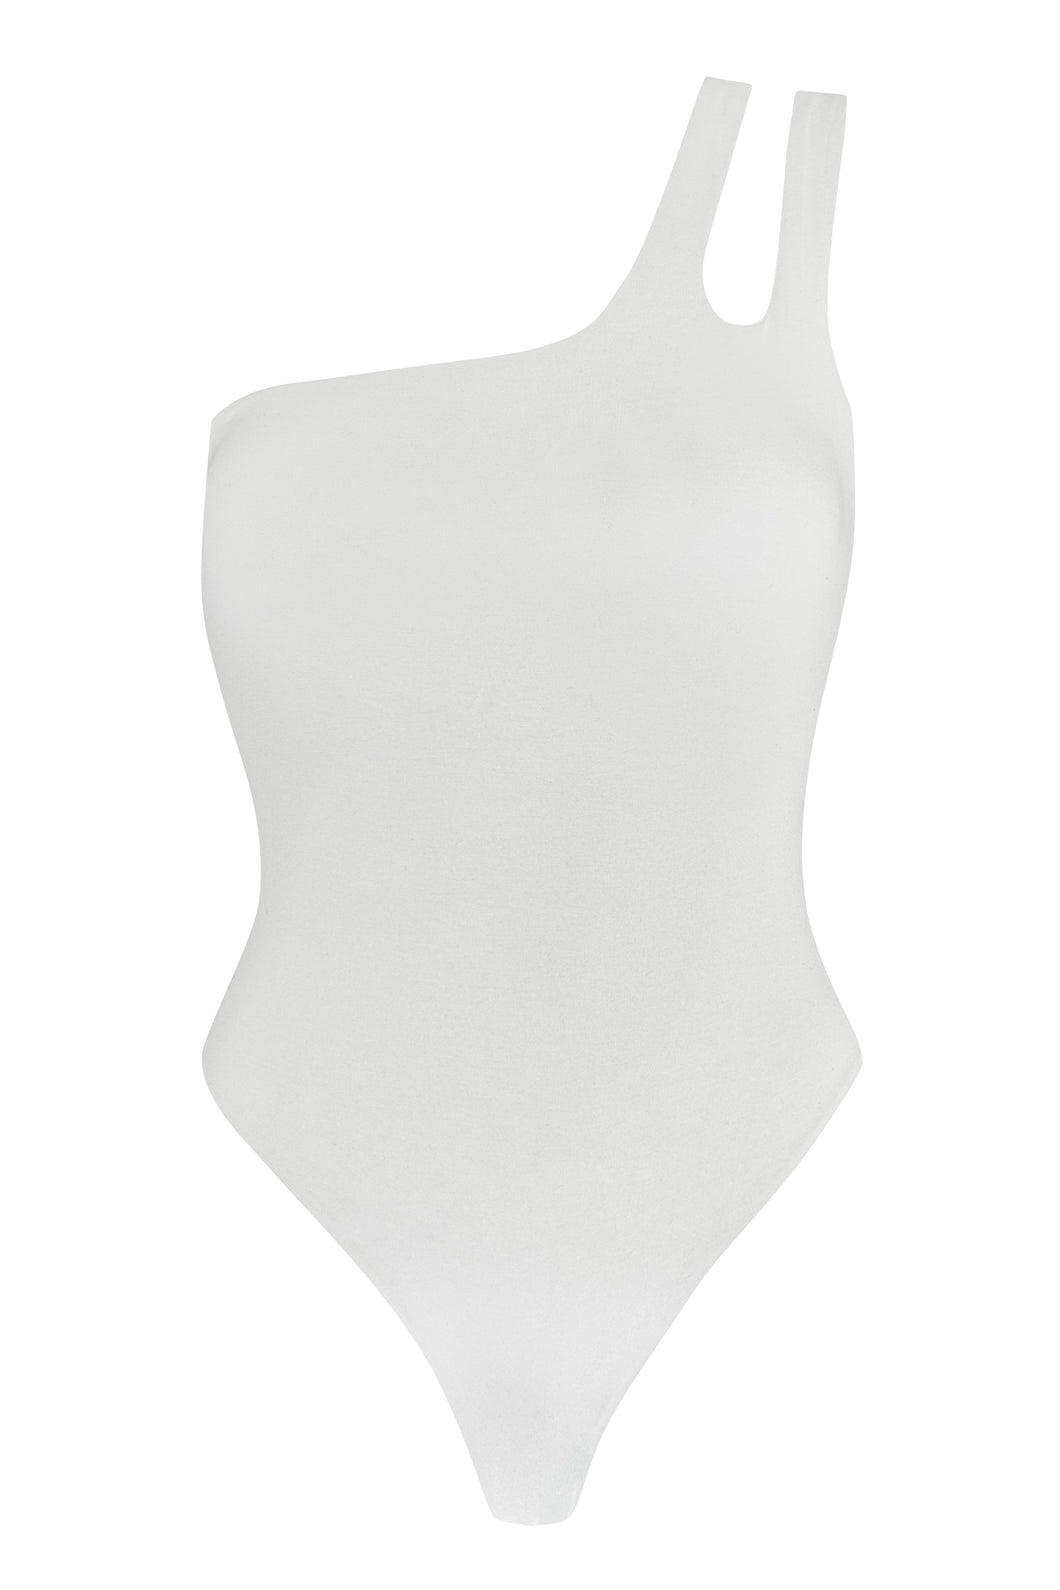 Two Strap Asymmetric Bodysuit Sample in Off-White